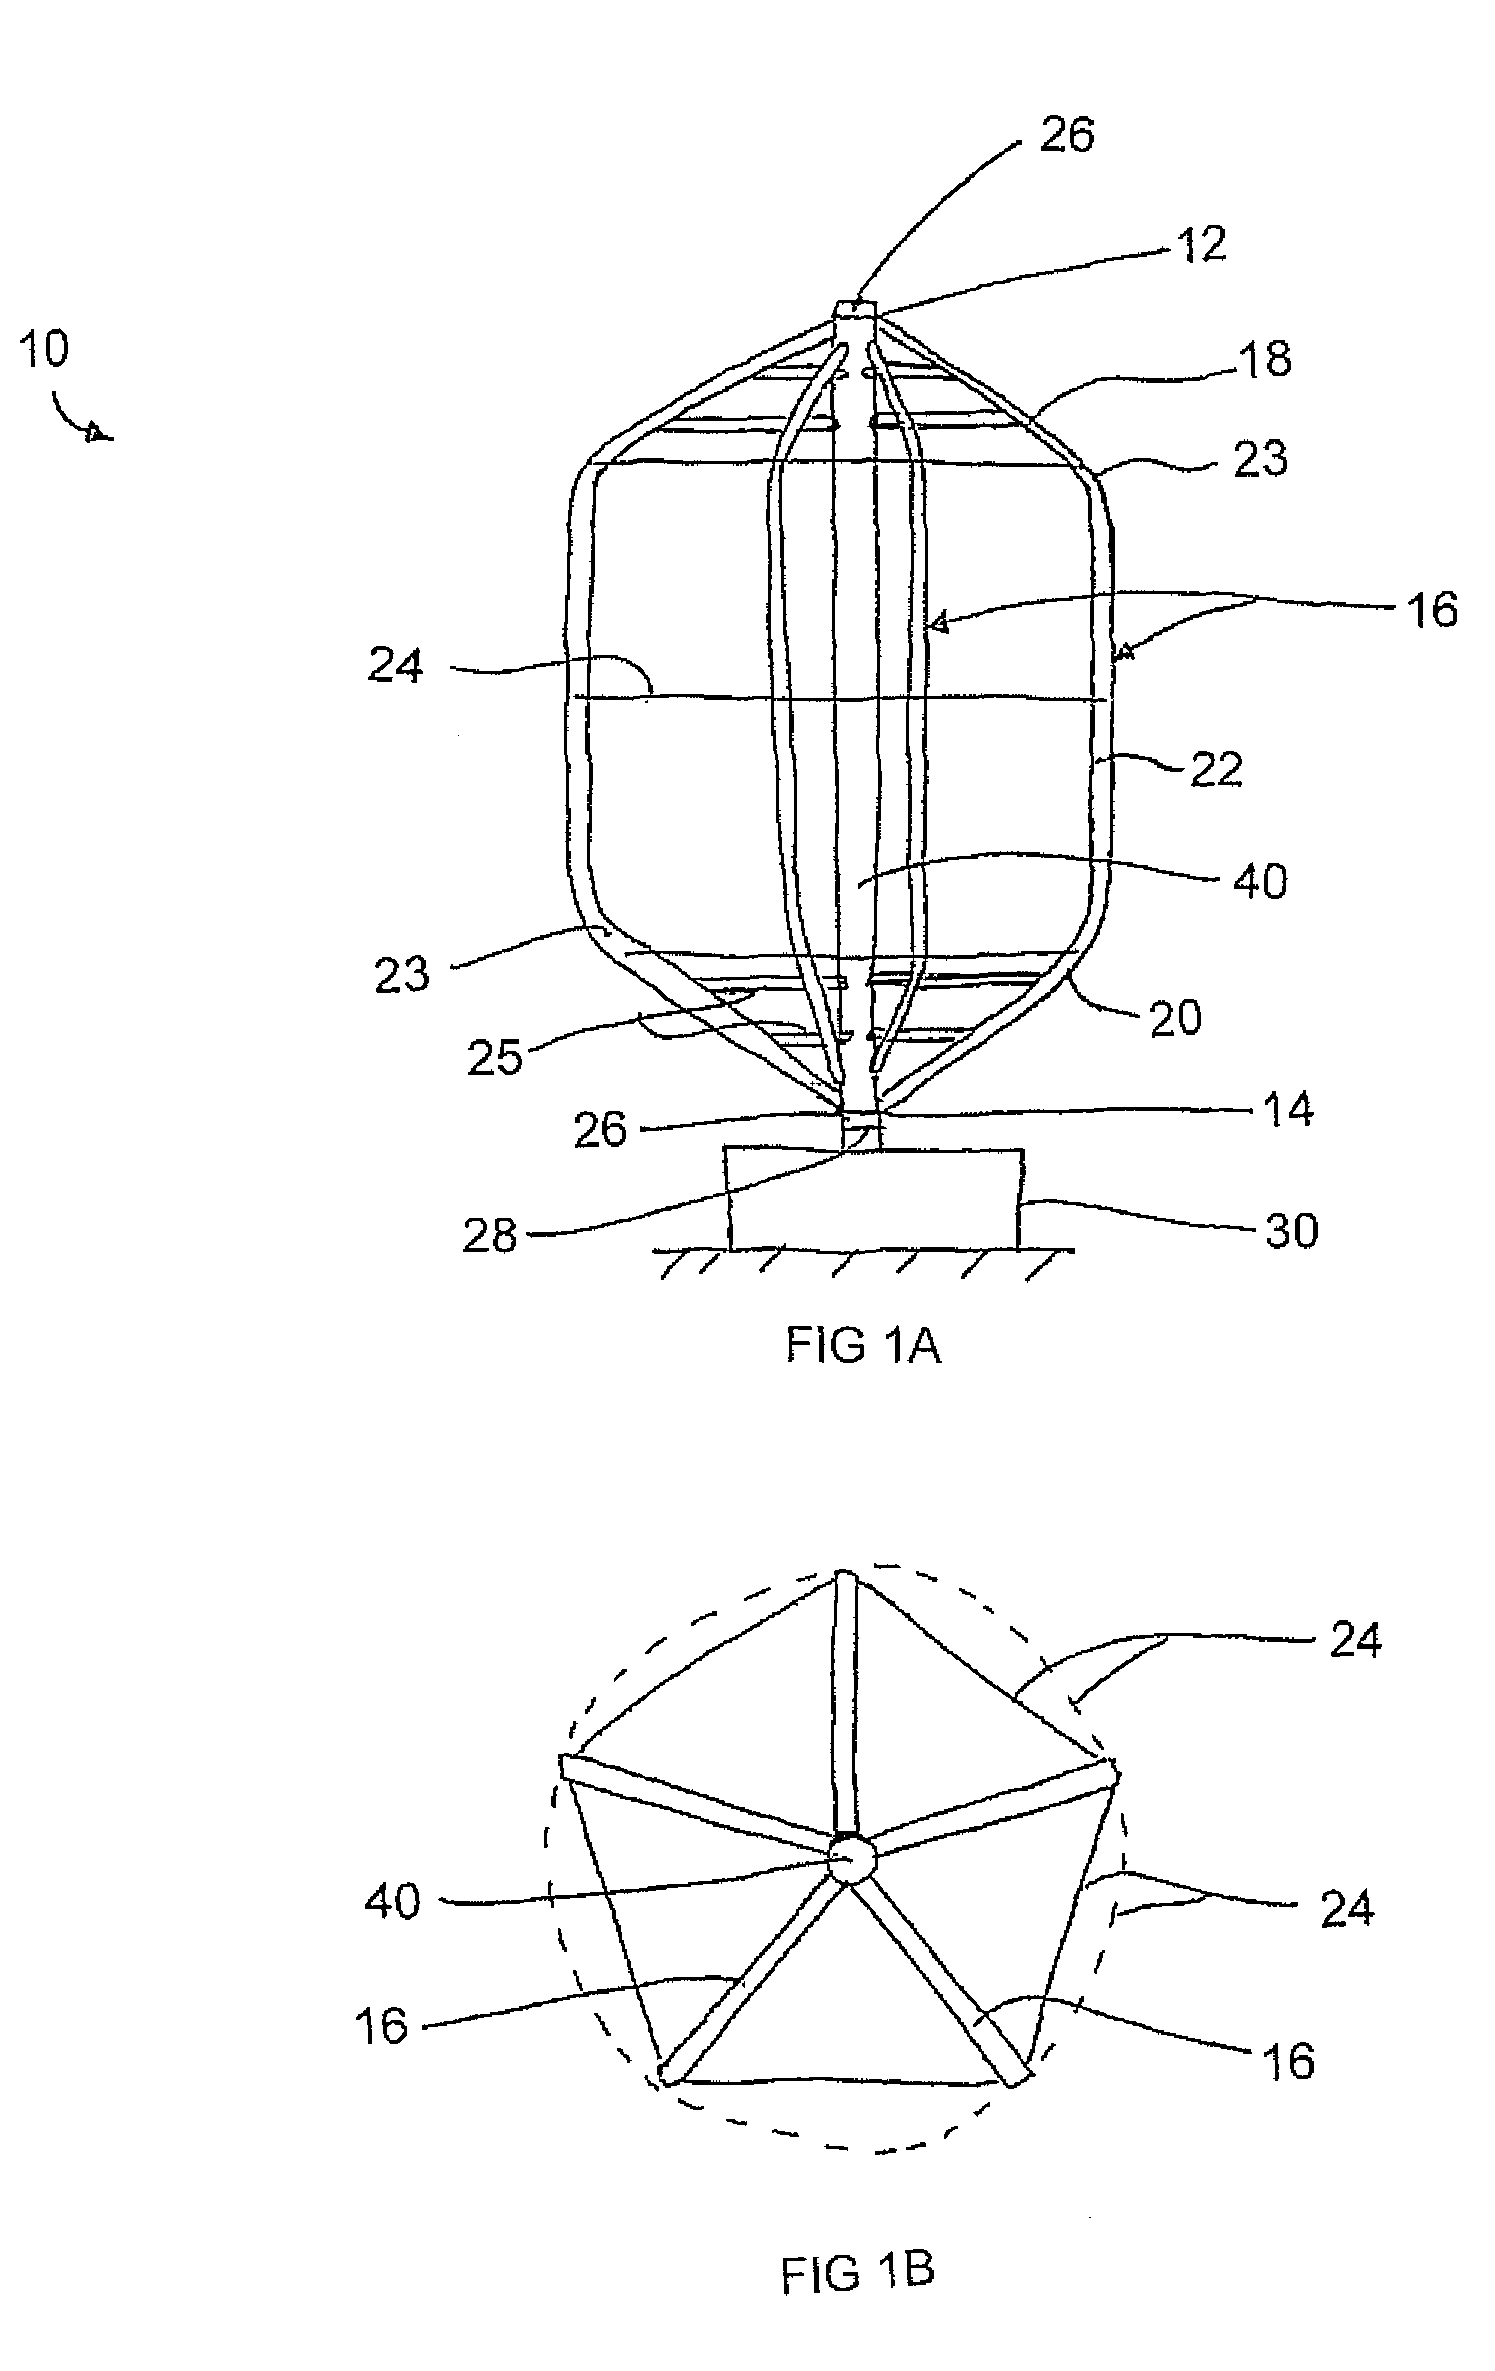 Modified darrieus vertical axis turbine